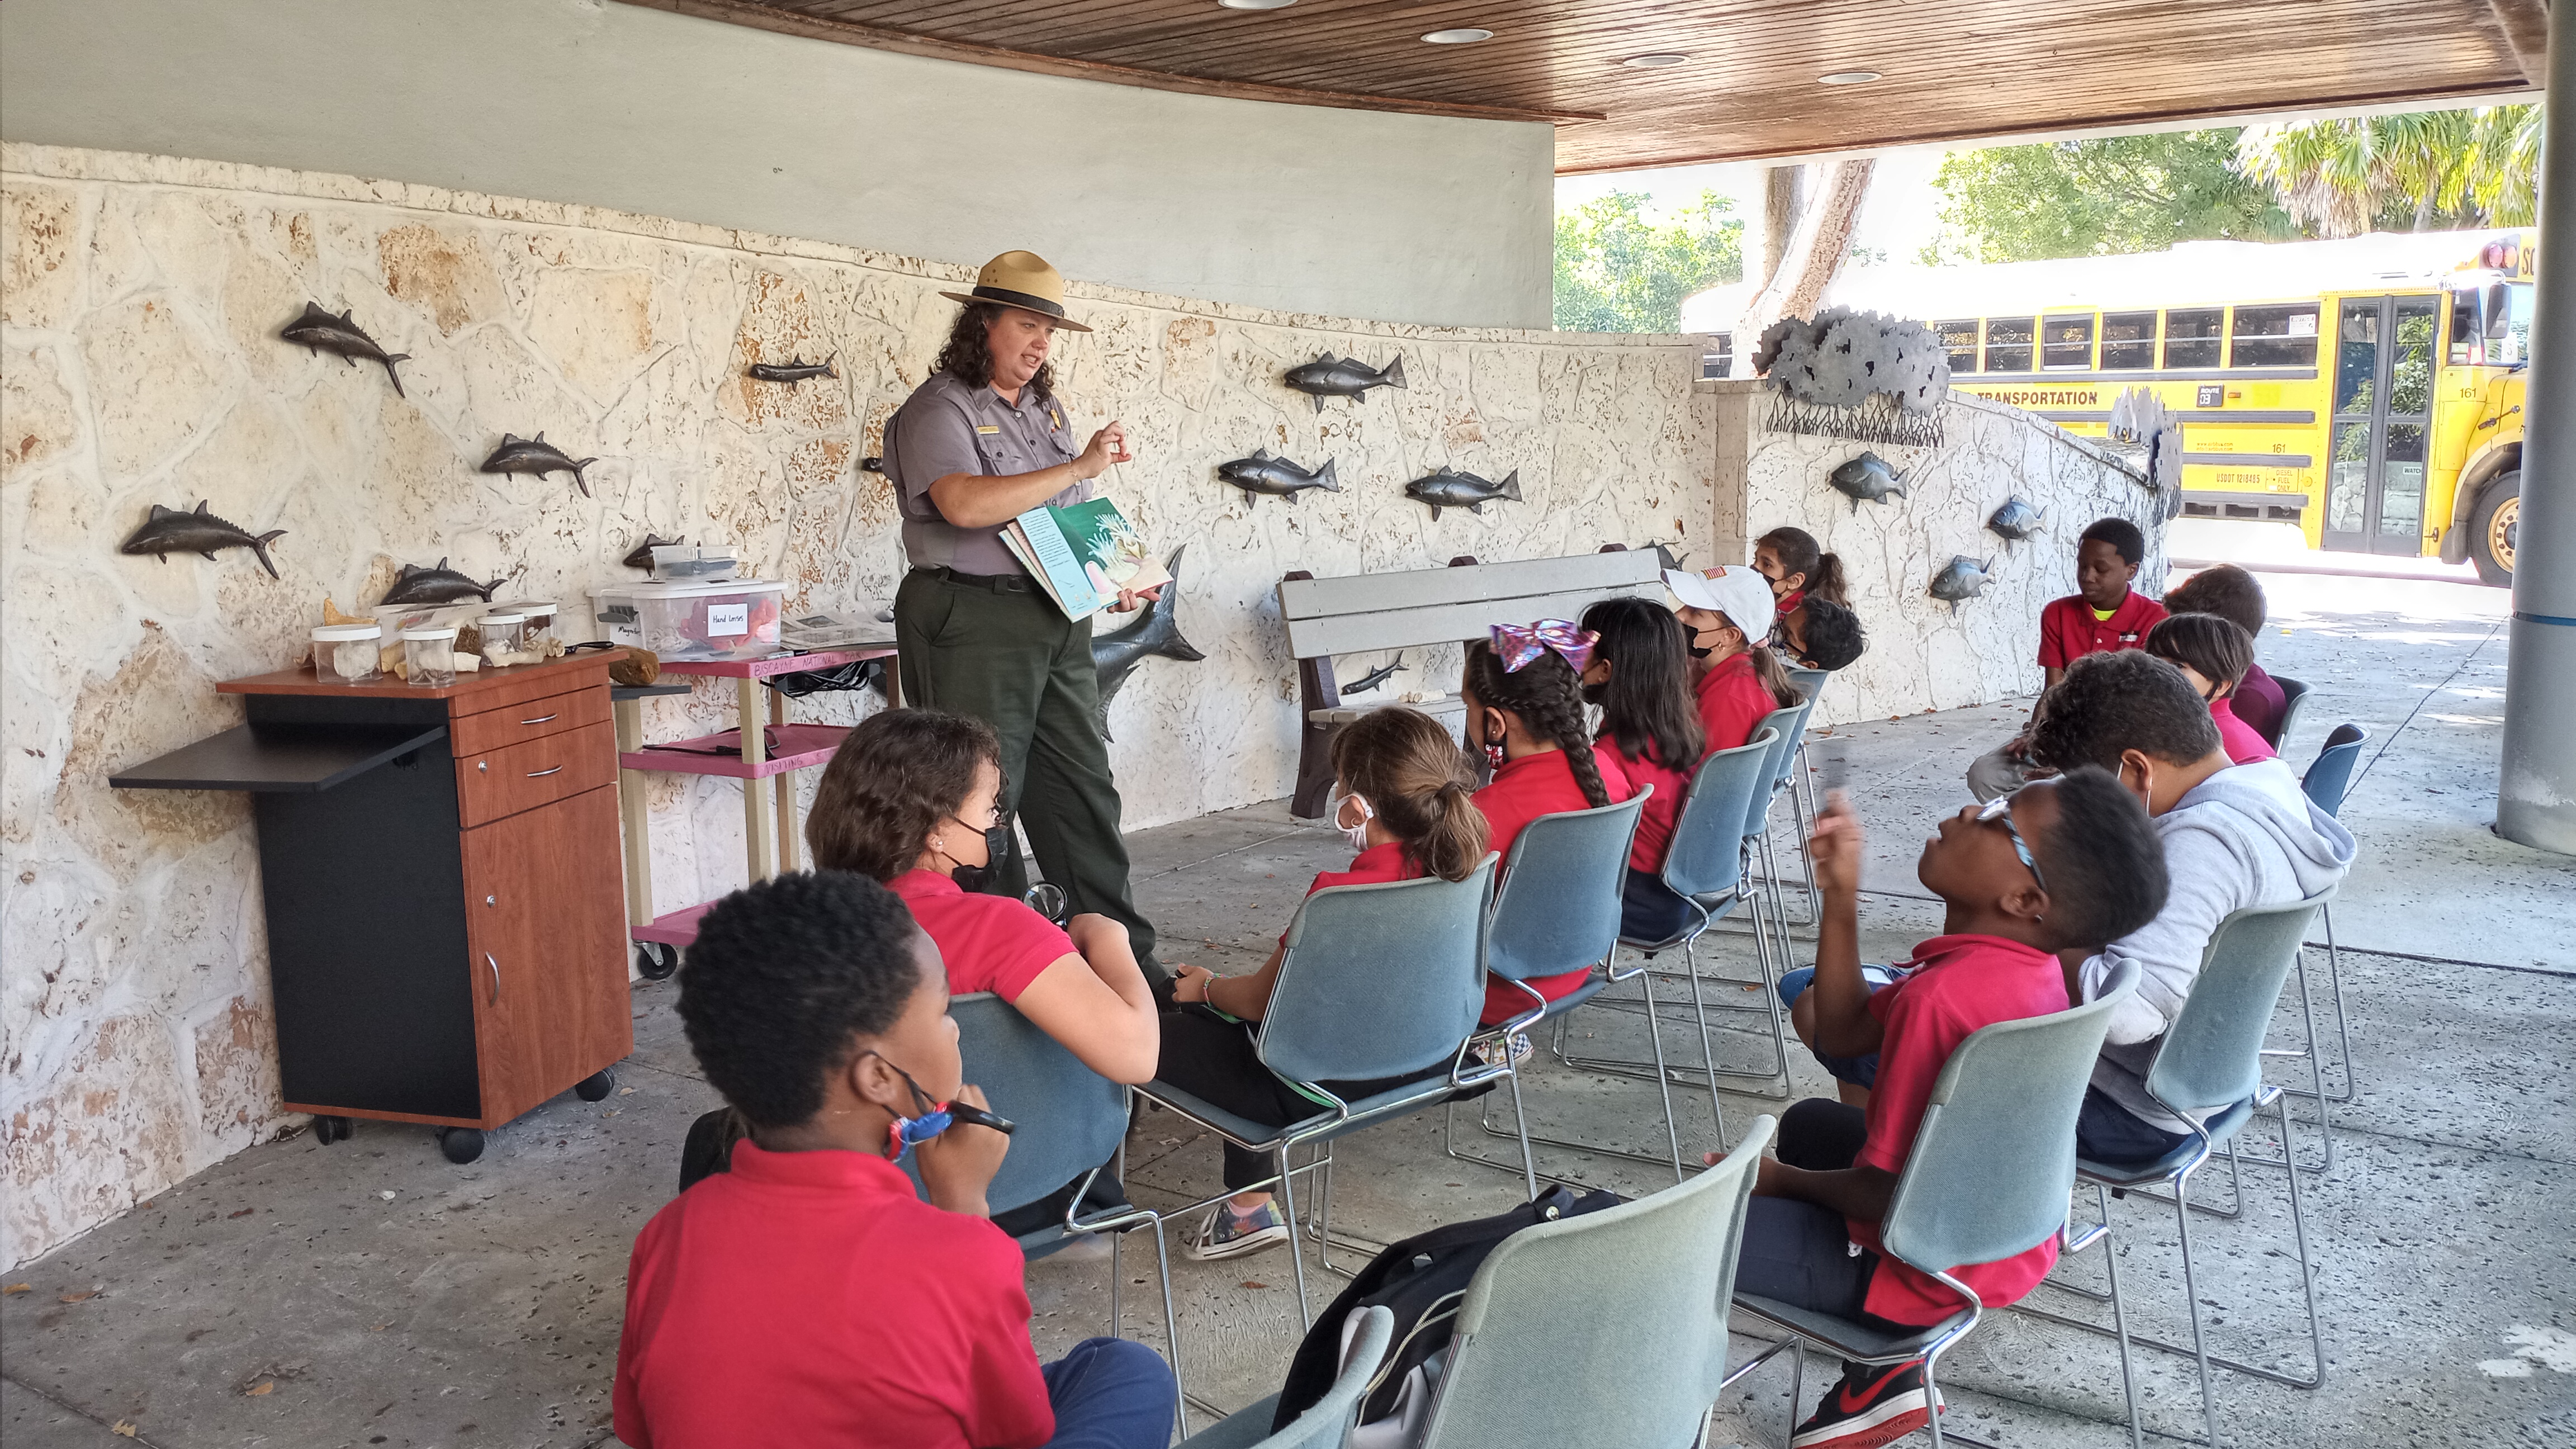 A ranger in uniform teaches a group of kids